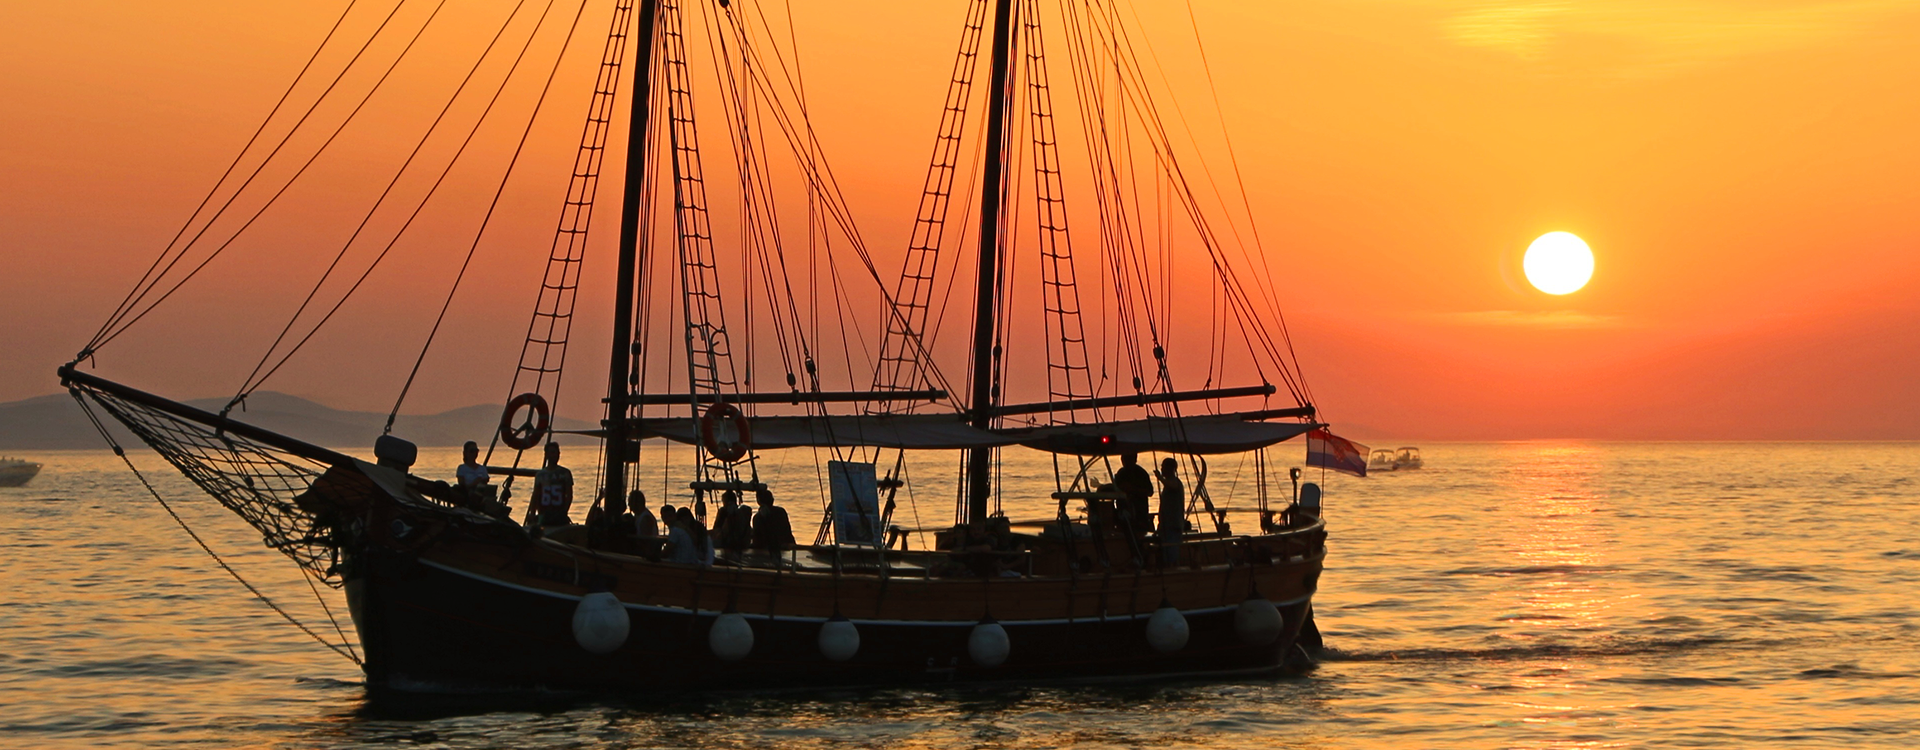 Sailing Boat ship sunset peaceful